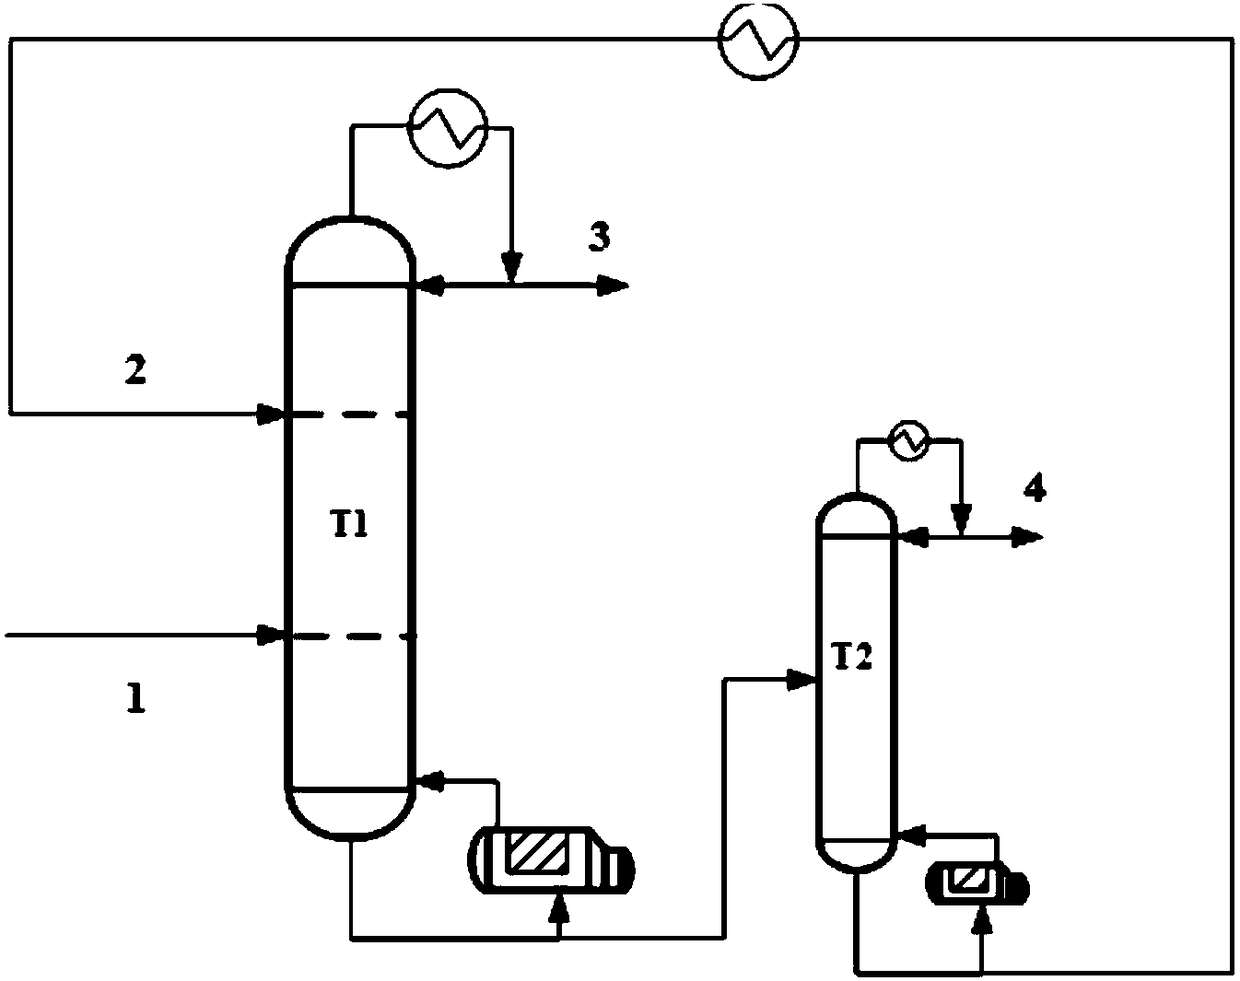 Purification method of dimethyl carbonate